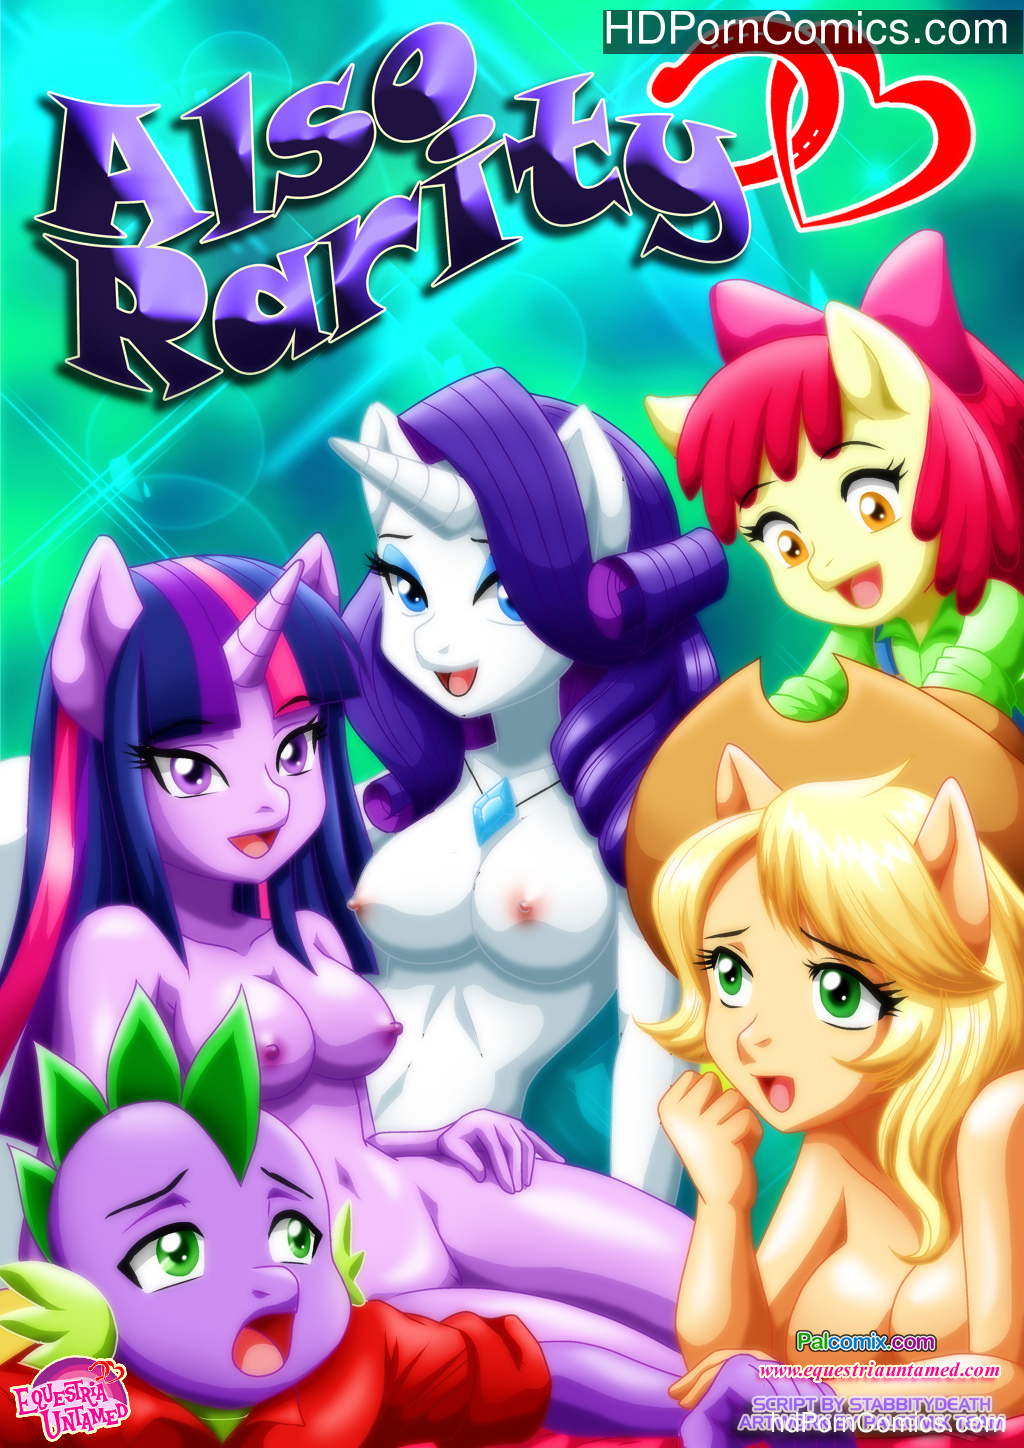 Also Rarity (My Little Pony Friendship Is Magic) - Porncomics free Porn  Comic - HD Porn Comics